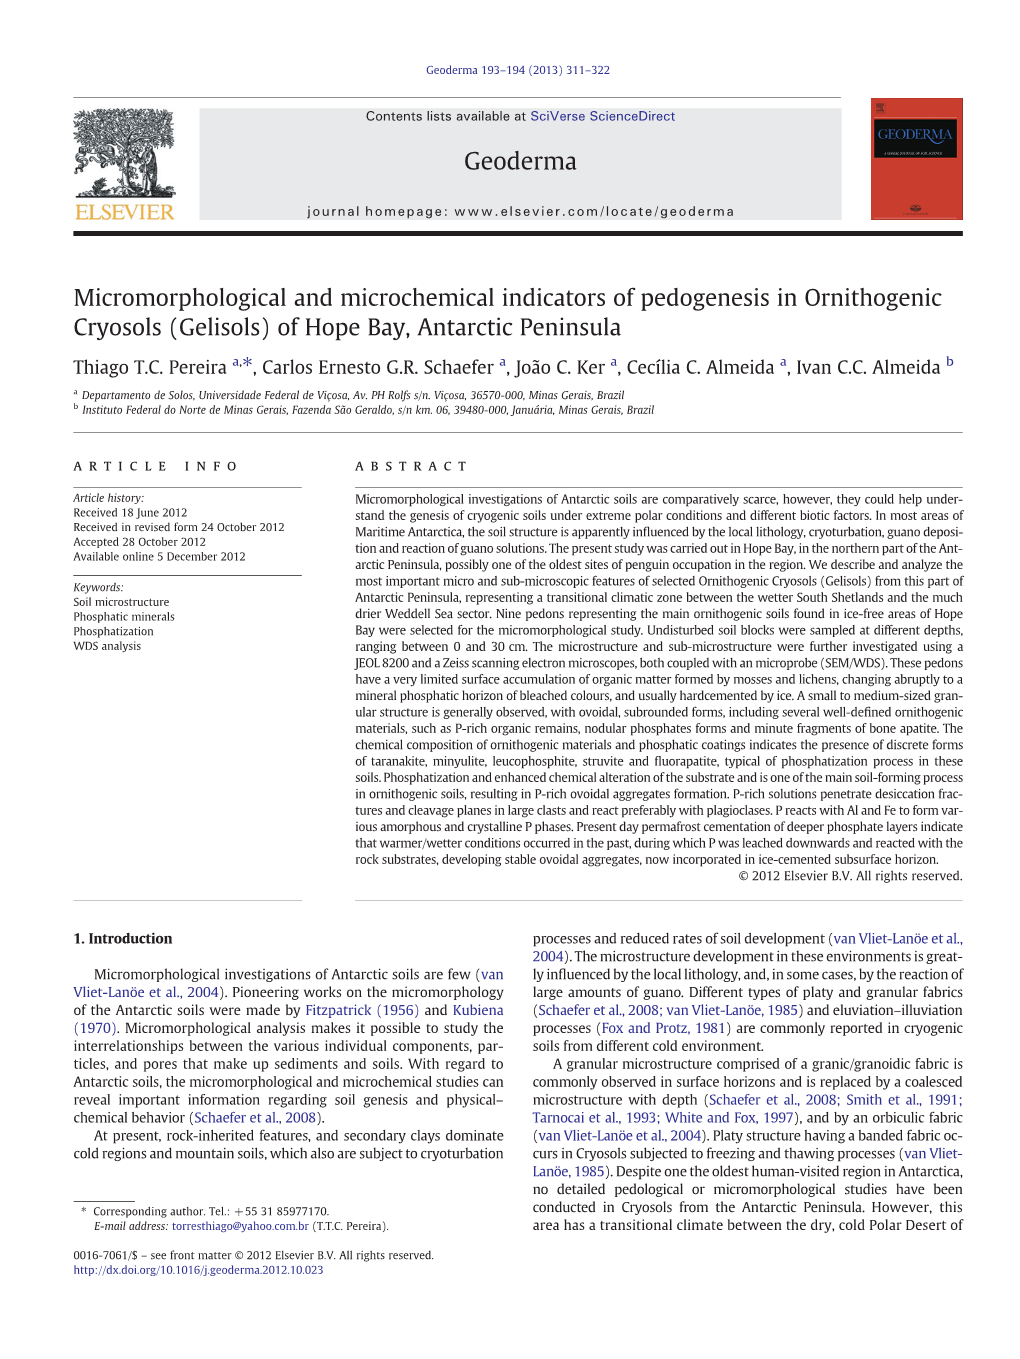 Micromorphological and Microchemical Indicators of Pedogenesis in Ornithogenic Cryosols (Gelisols) of Hope Bay, Antarctic Peninsula